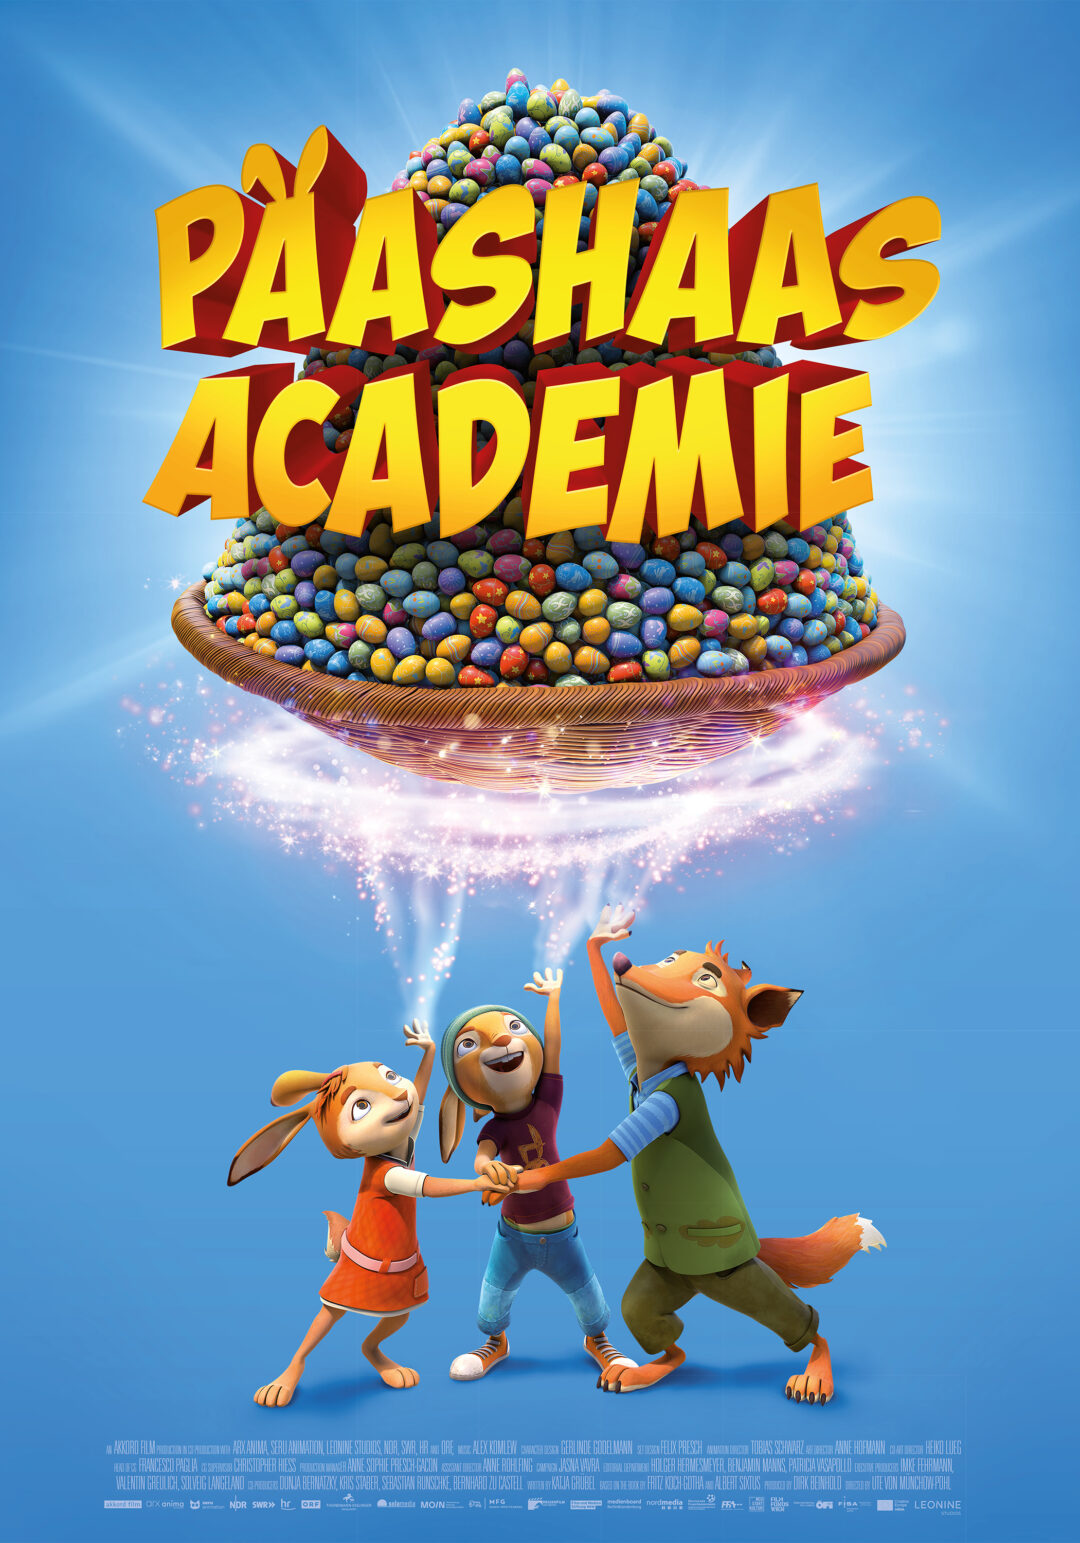 Paashaas-Academie_ps_1_jpg_sd-high.jpg